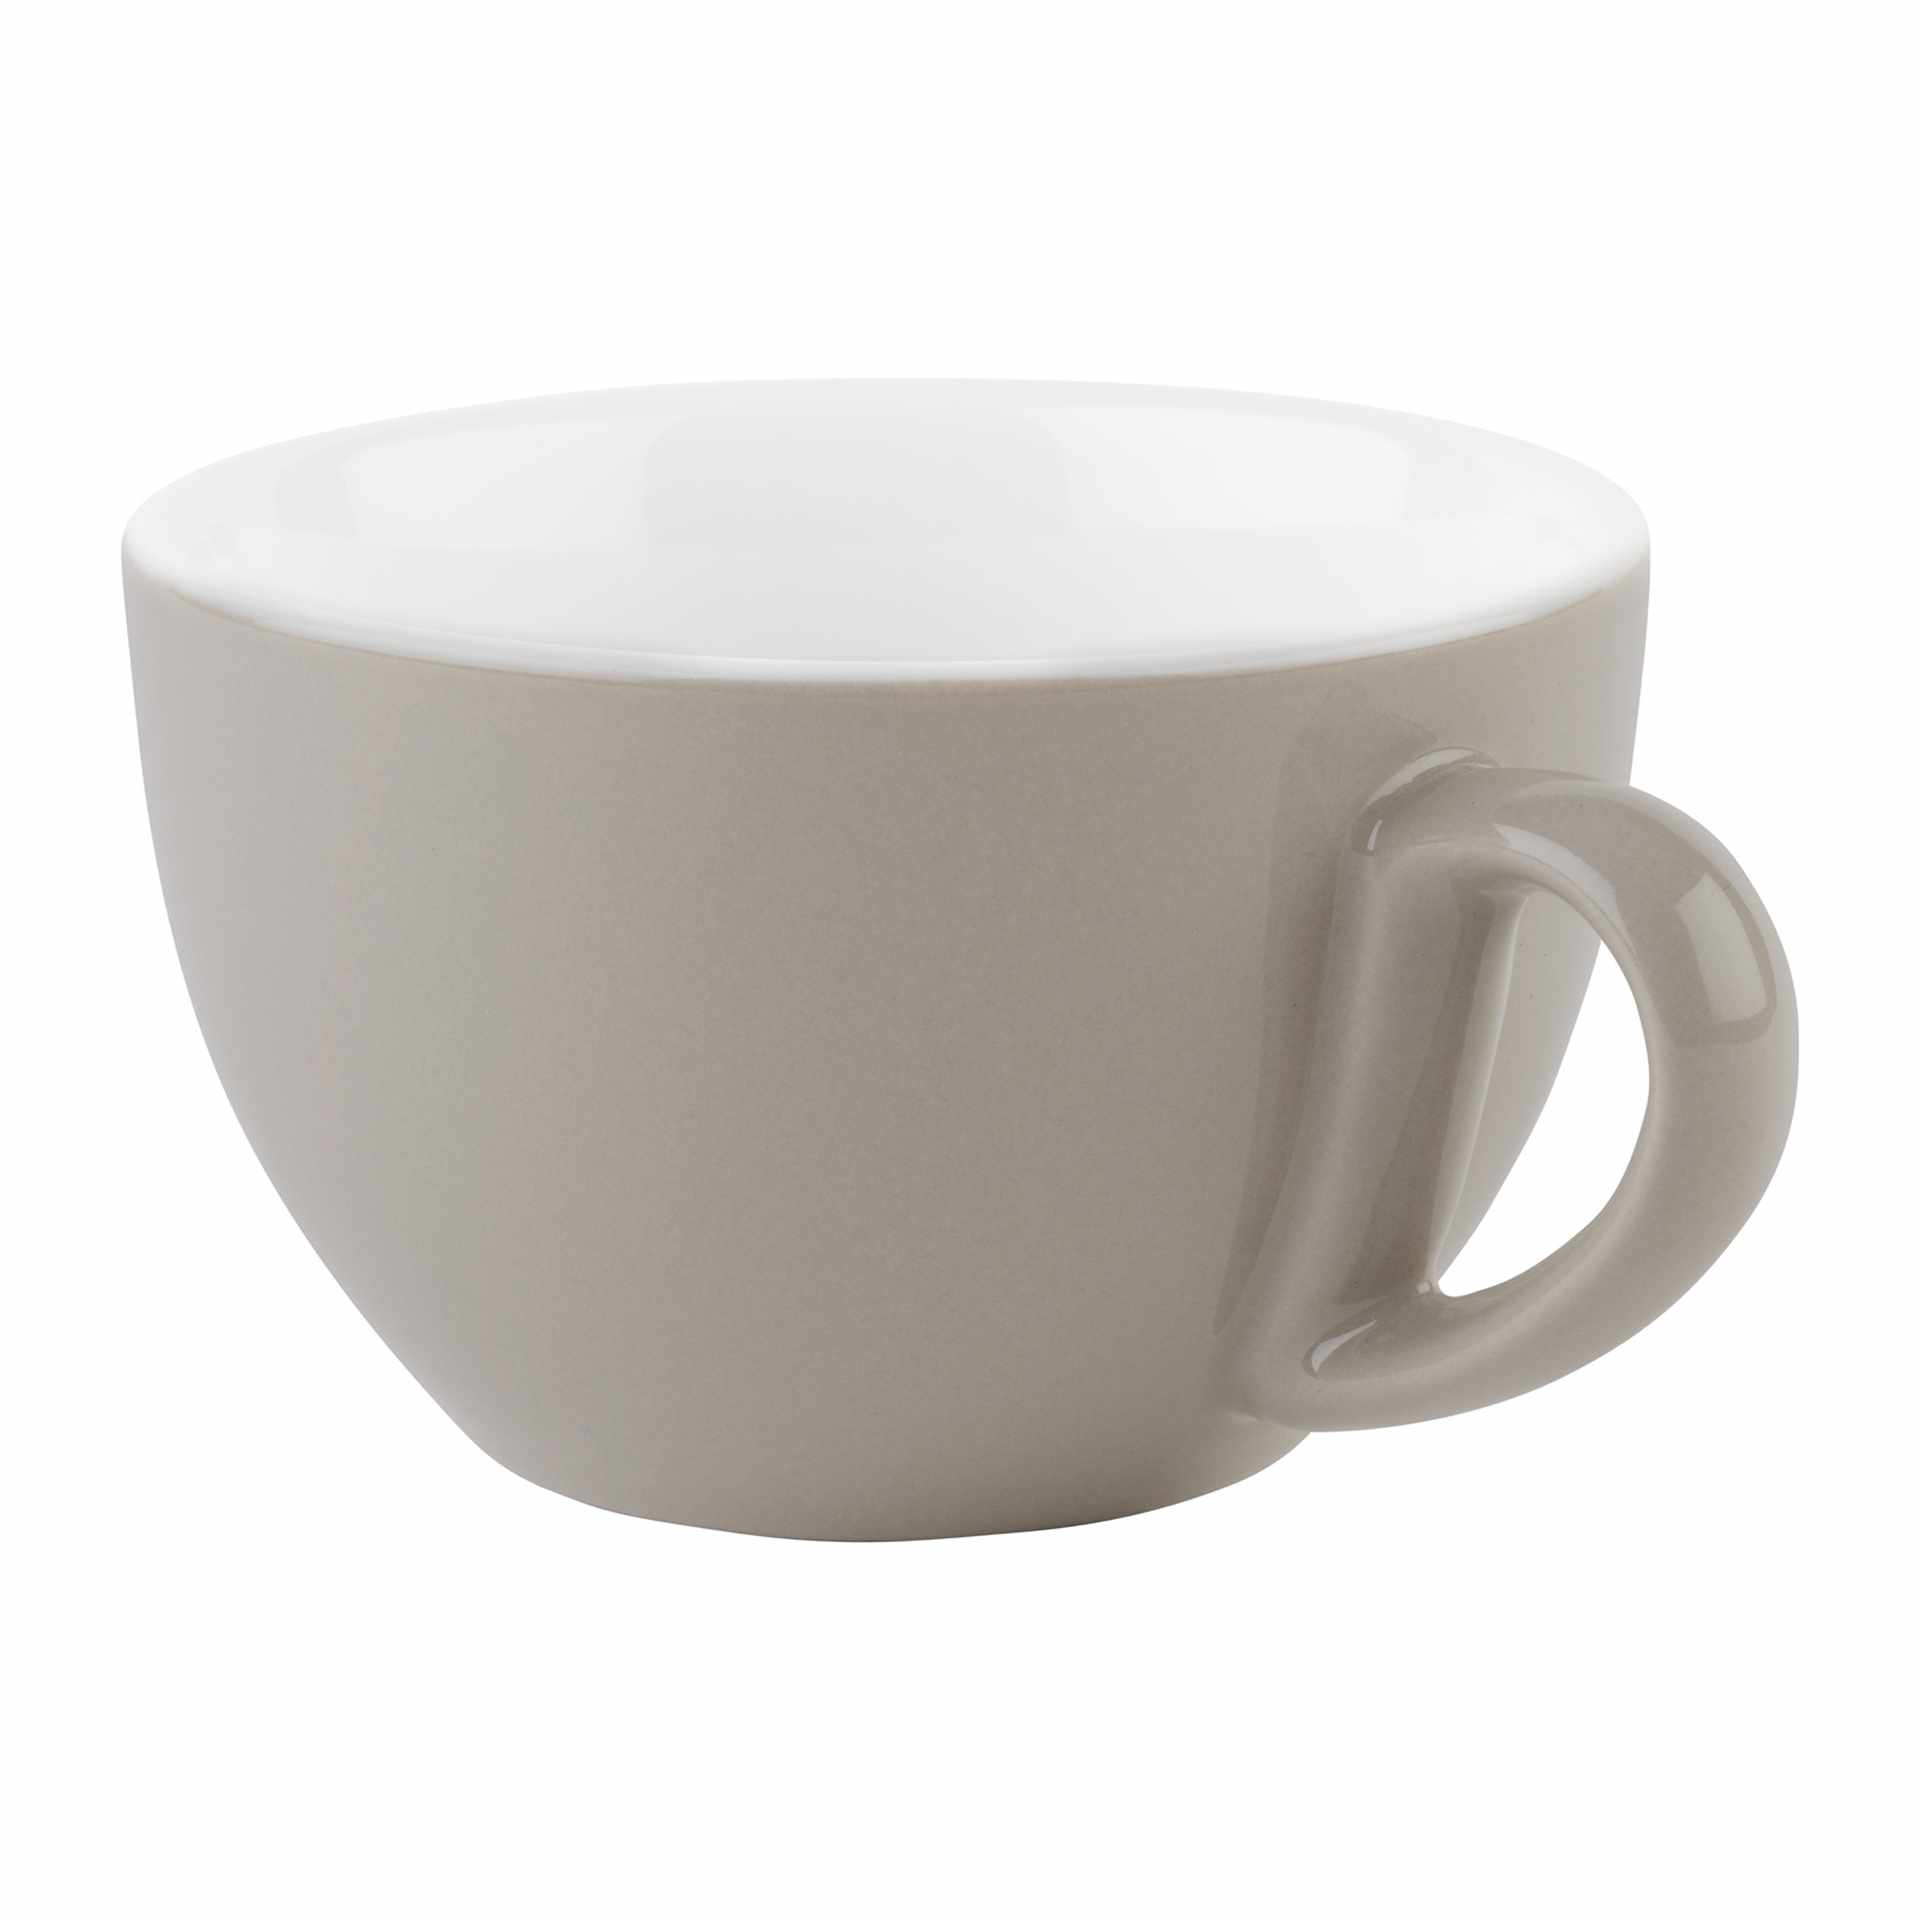 Cappuccino-Tasse - Serie Snug - grau - Höhe 6,5 cm - Ø 10,5 cm - Inhalt 0,30 l - Porzellan - 16006-B